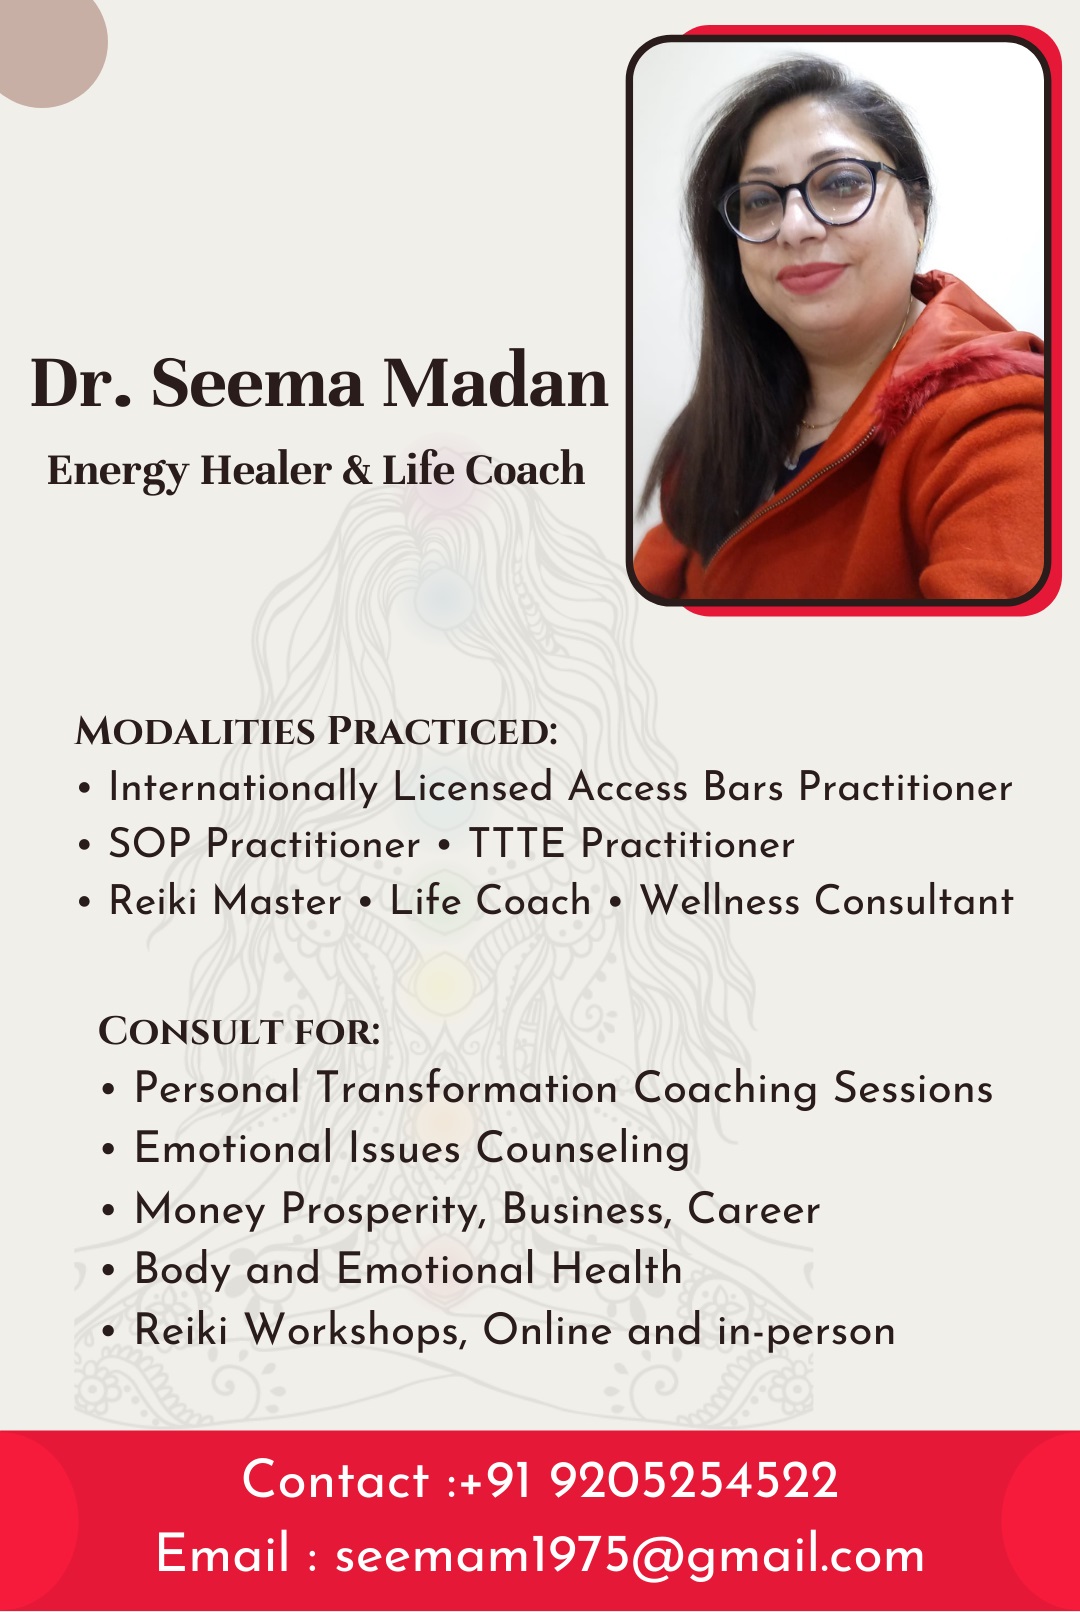 Dr. Seema Madan - Energy Healer & Life Coach - Jalandhar